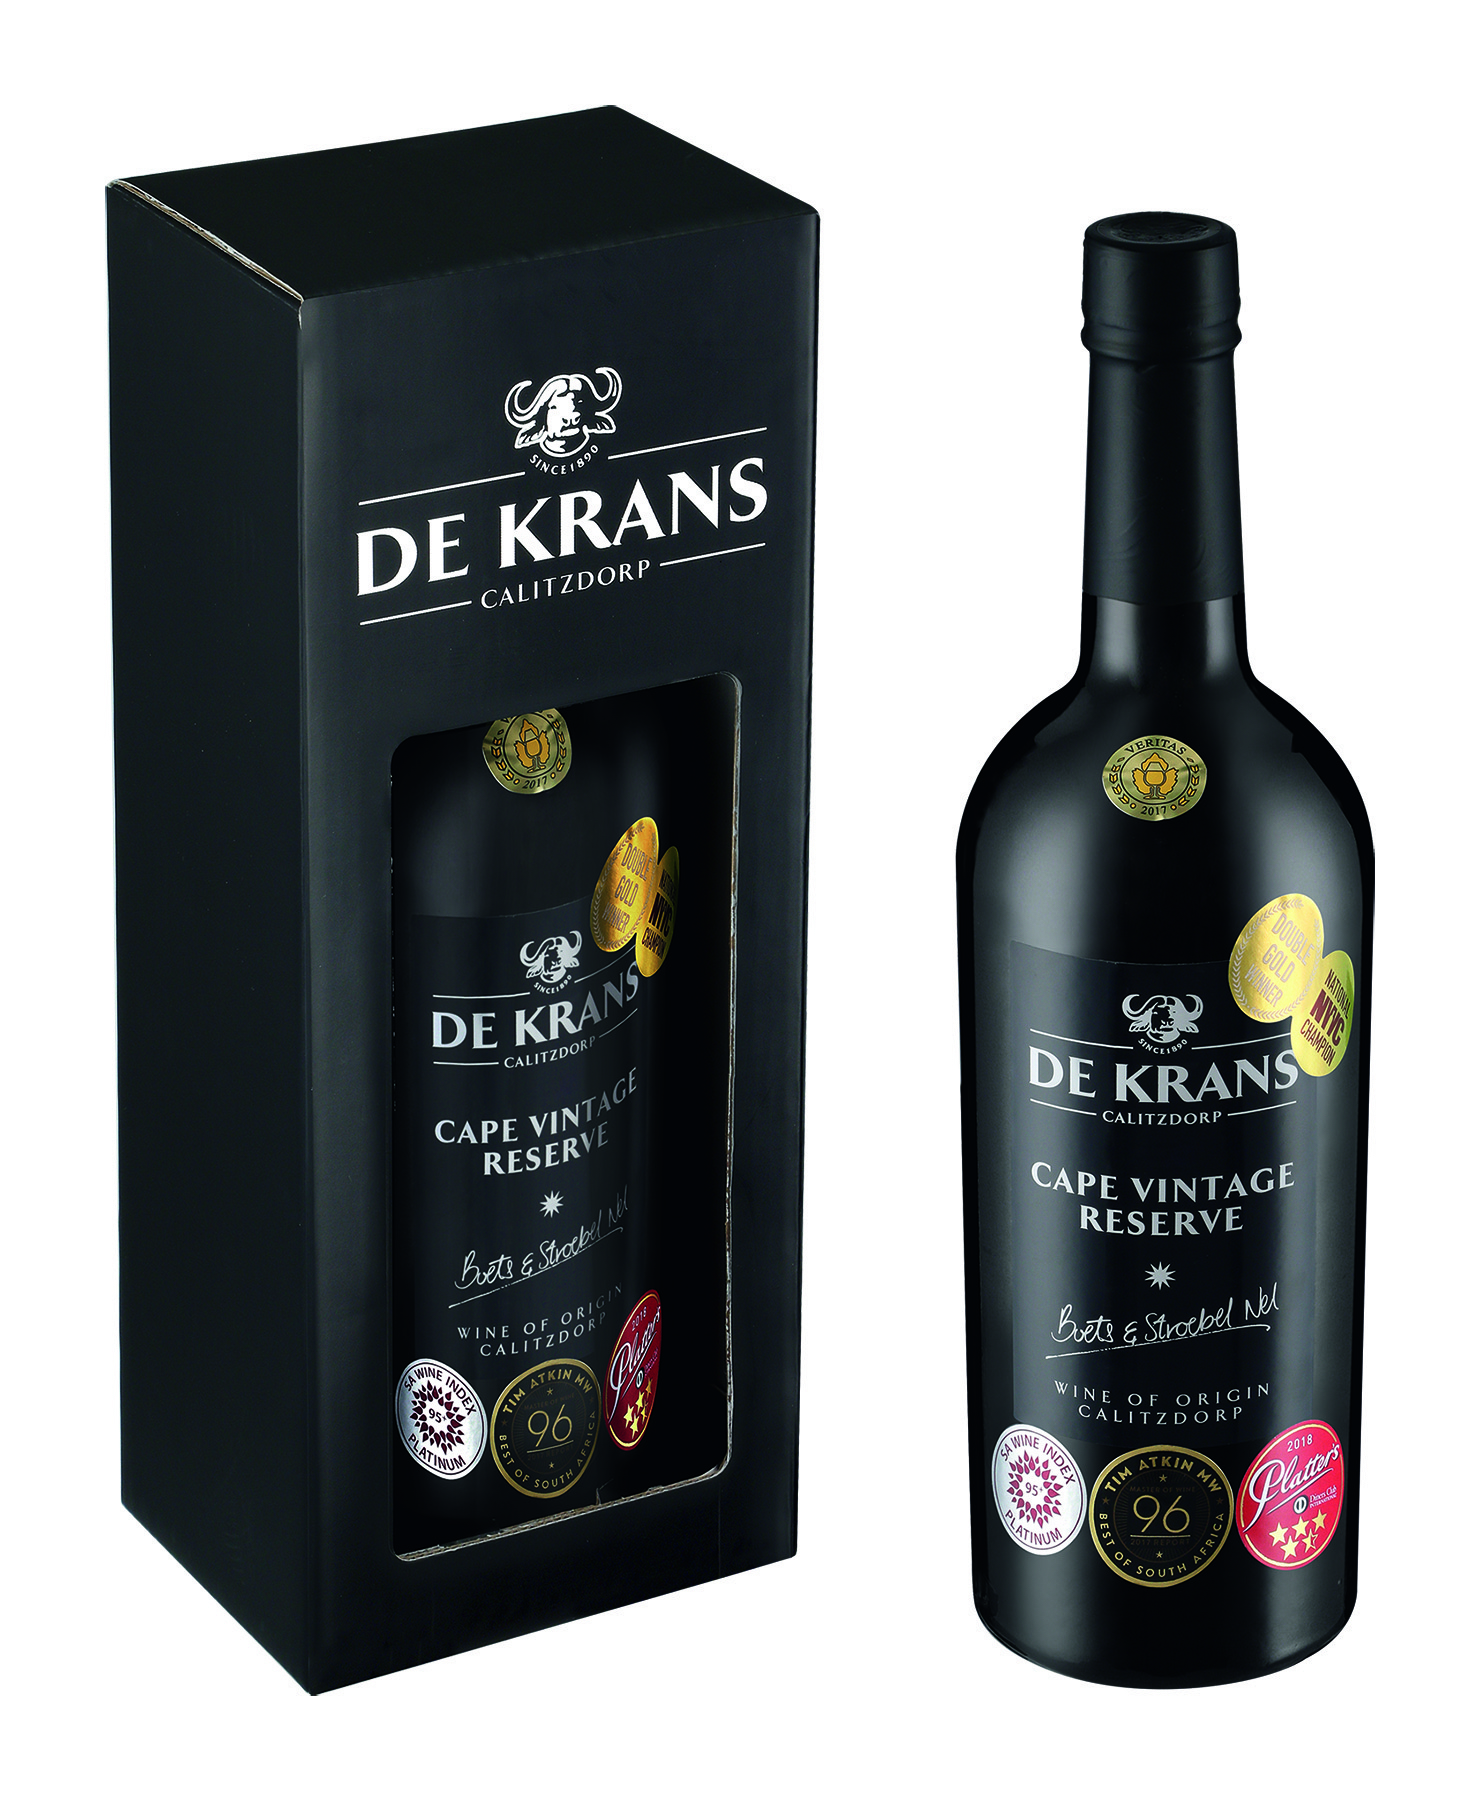 De Krans Top Cape Port producer in Top Wine SA Results photo